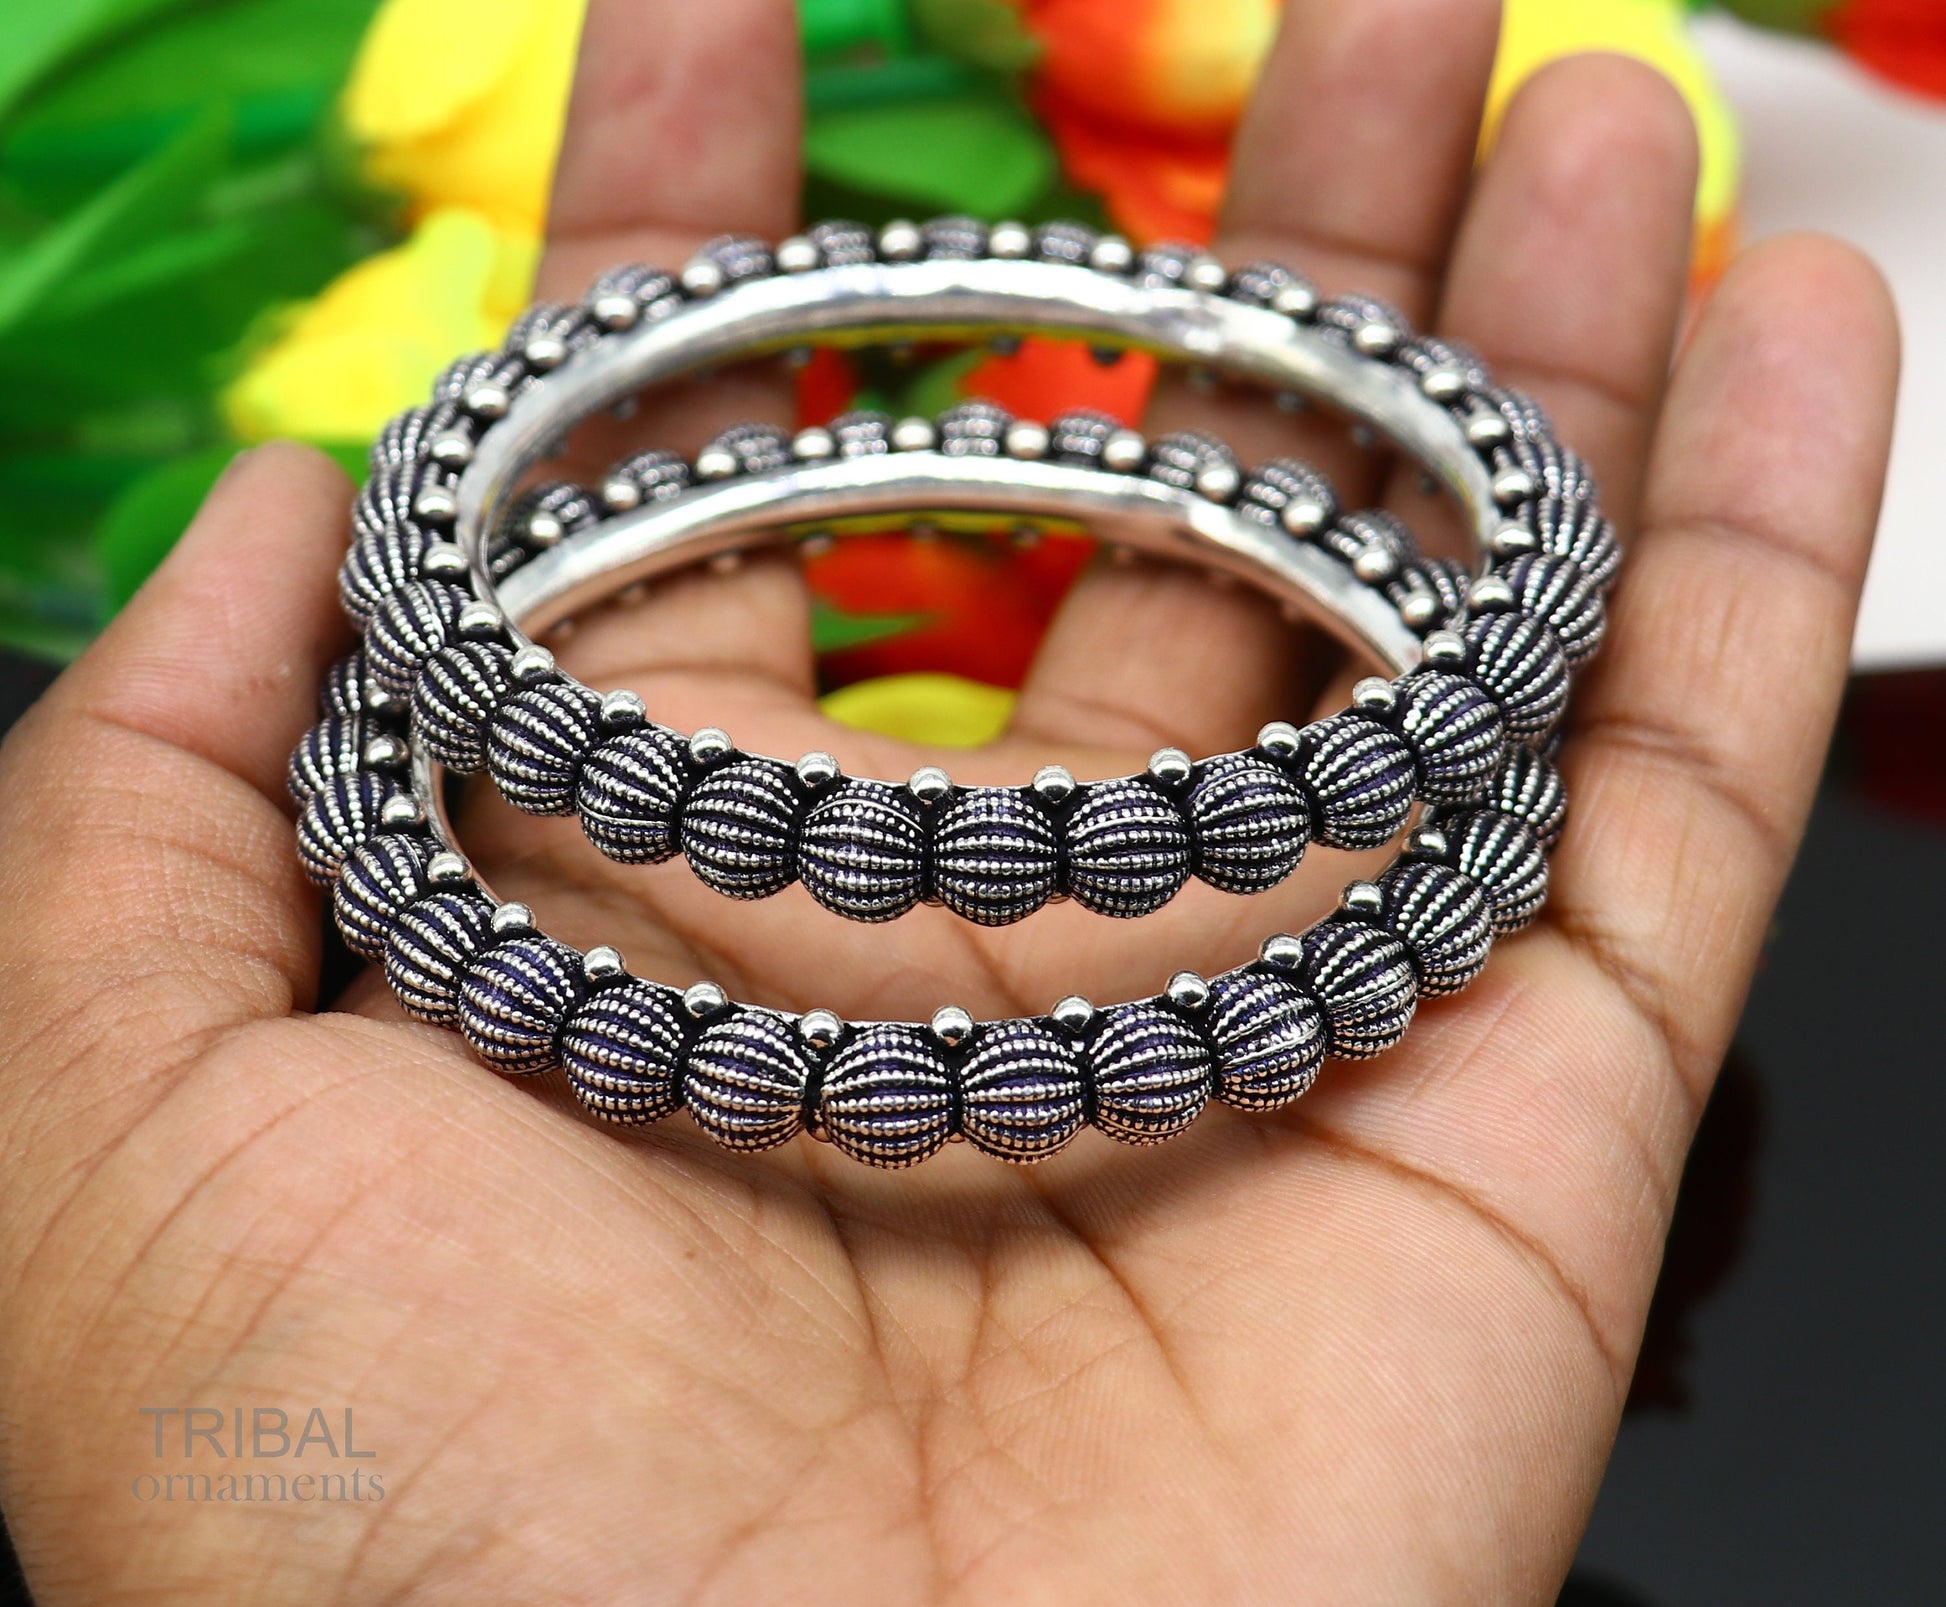 925 sterling silver handmade Indian vintage design bangle bracelet kada stunning stylish tribal brides jewelry gifting ethnic bangles ba122 - TRIBAL ORNAMENTS